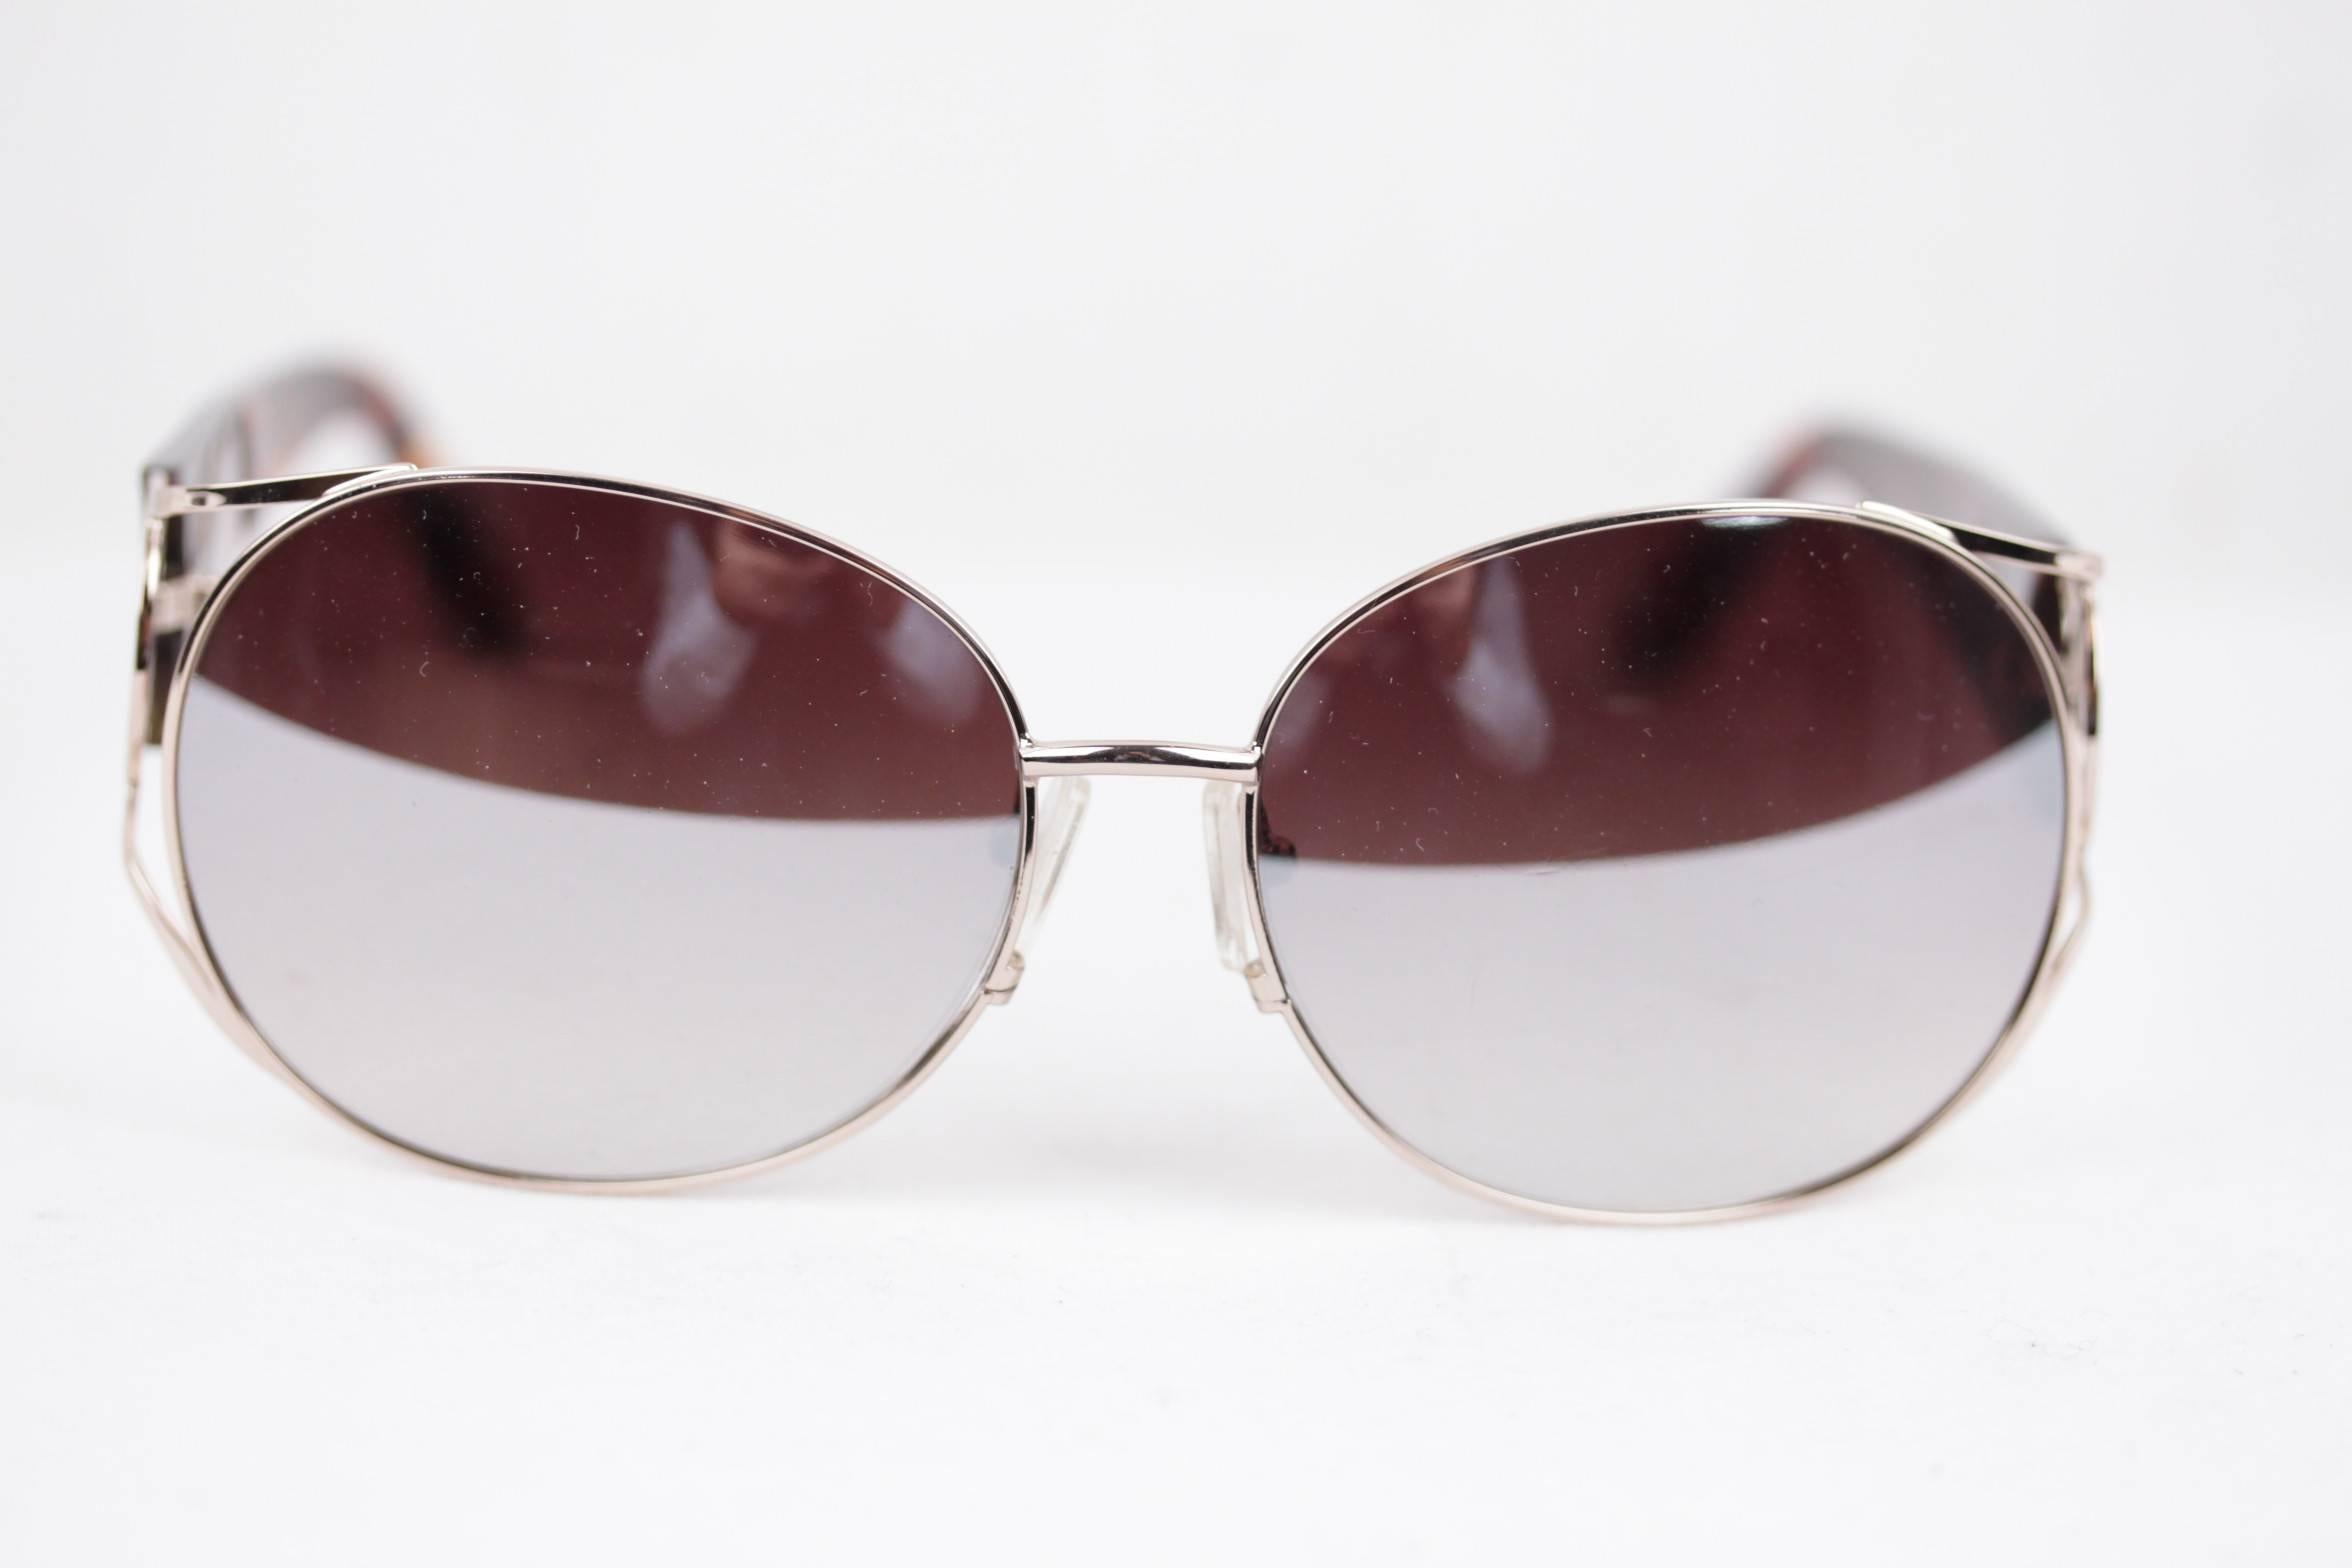 Women's ROMEO GIGLI silver/brown oversized Sunglasses RGG4/S col.D 61/15 135 mirror lens